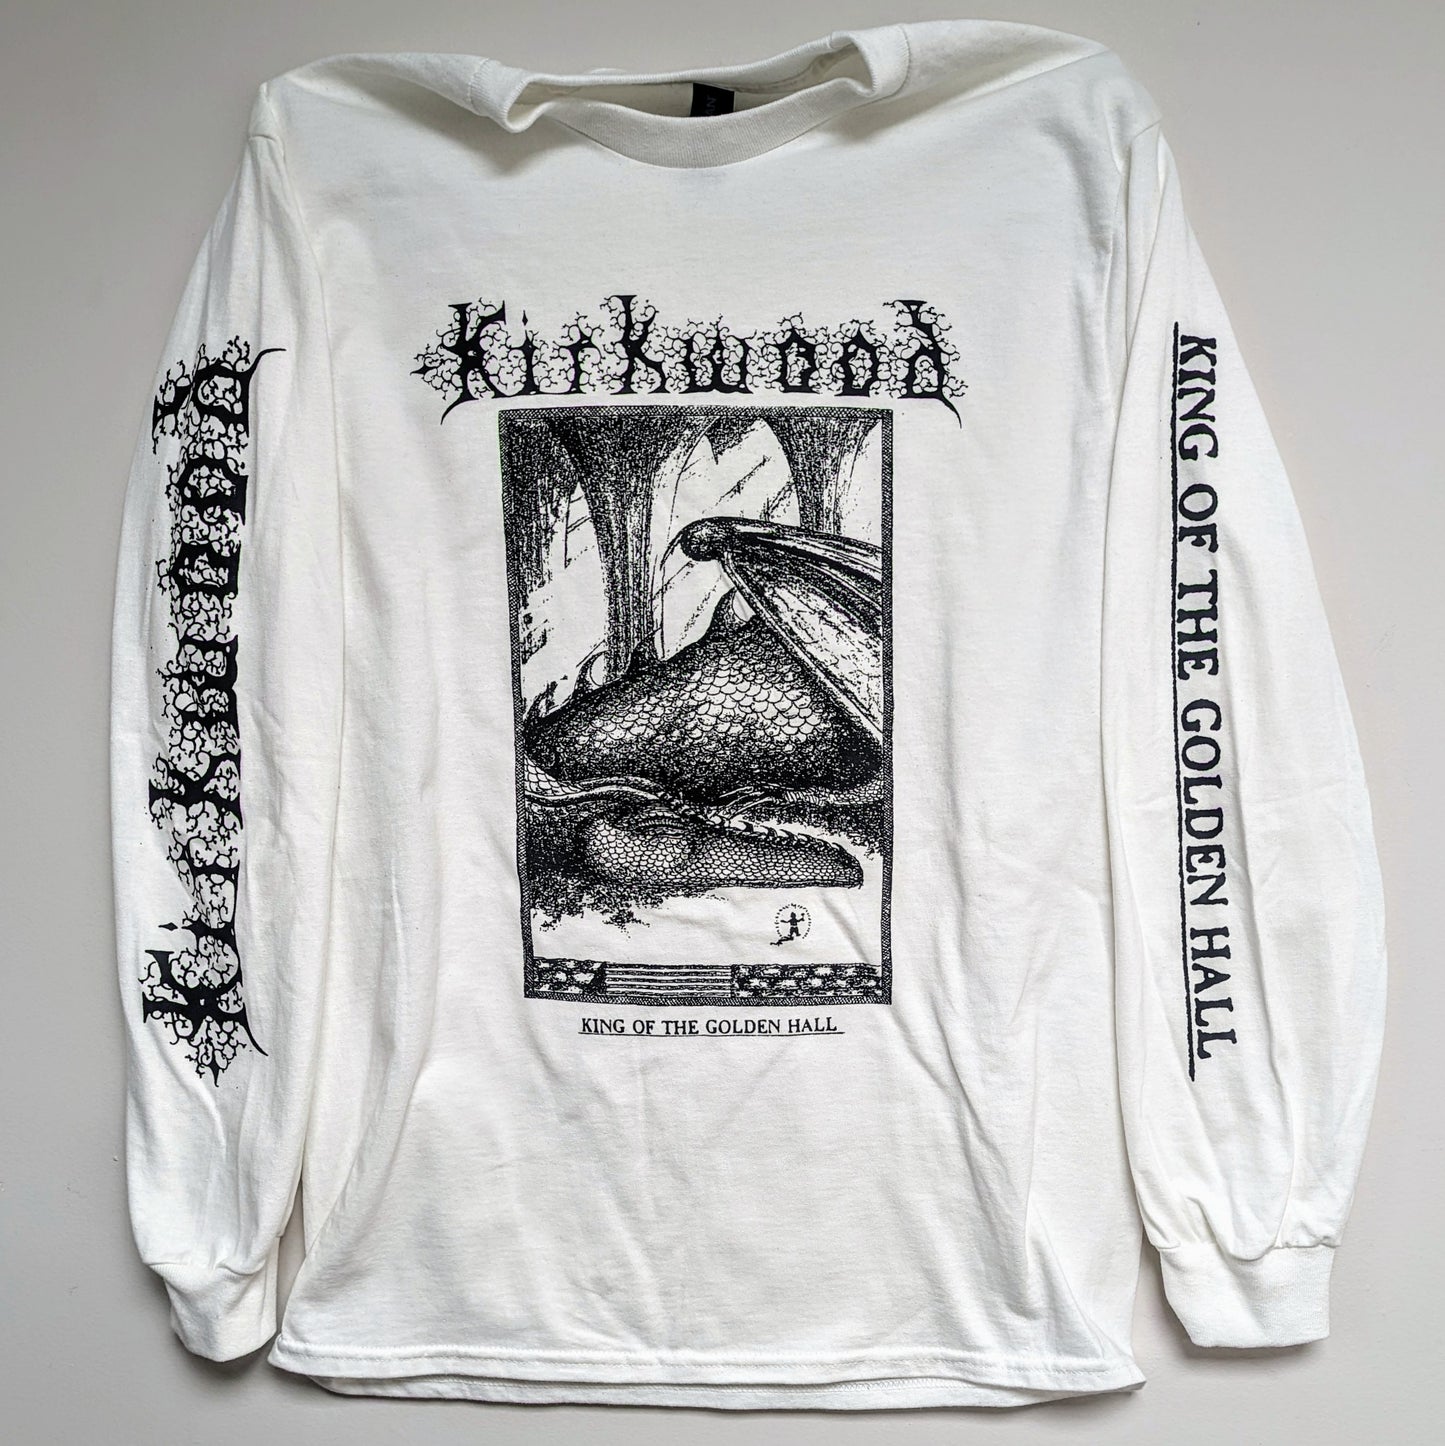 JIM KIRKWOOD "King of the Golden Hall" Long Sleeve Shirt [WHITE or BLACK]